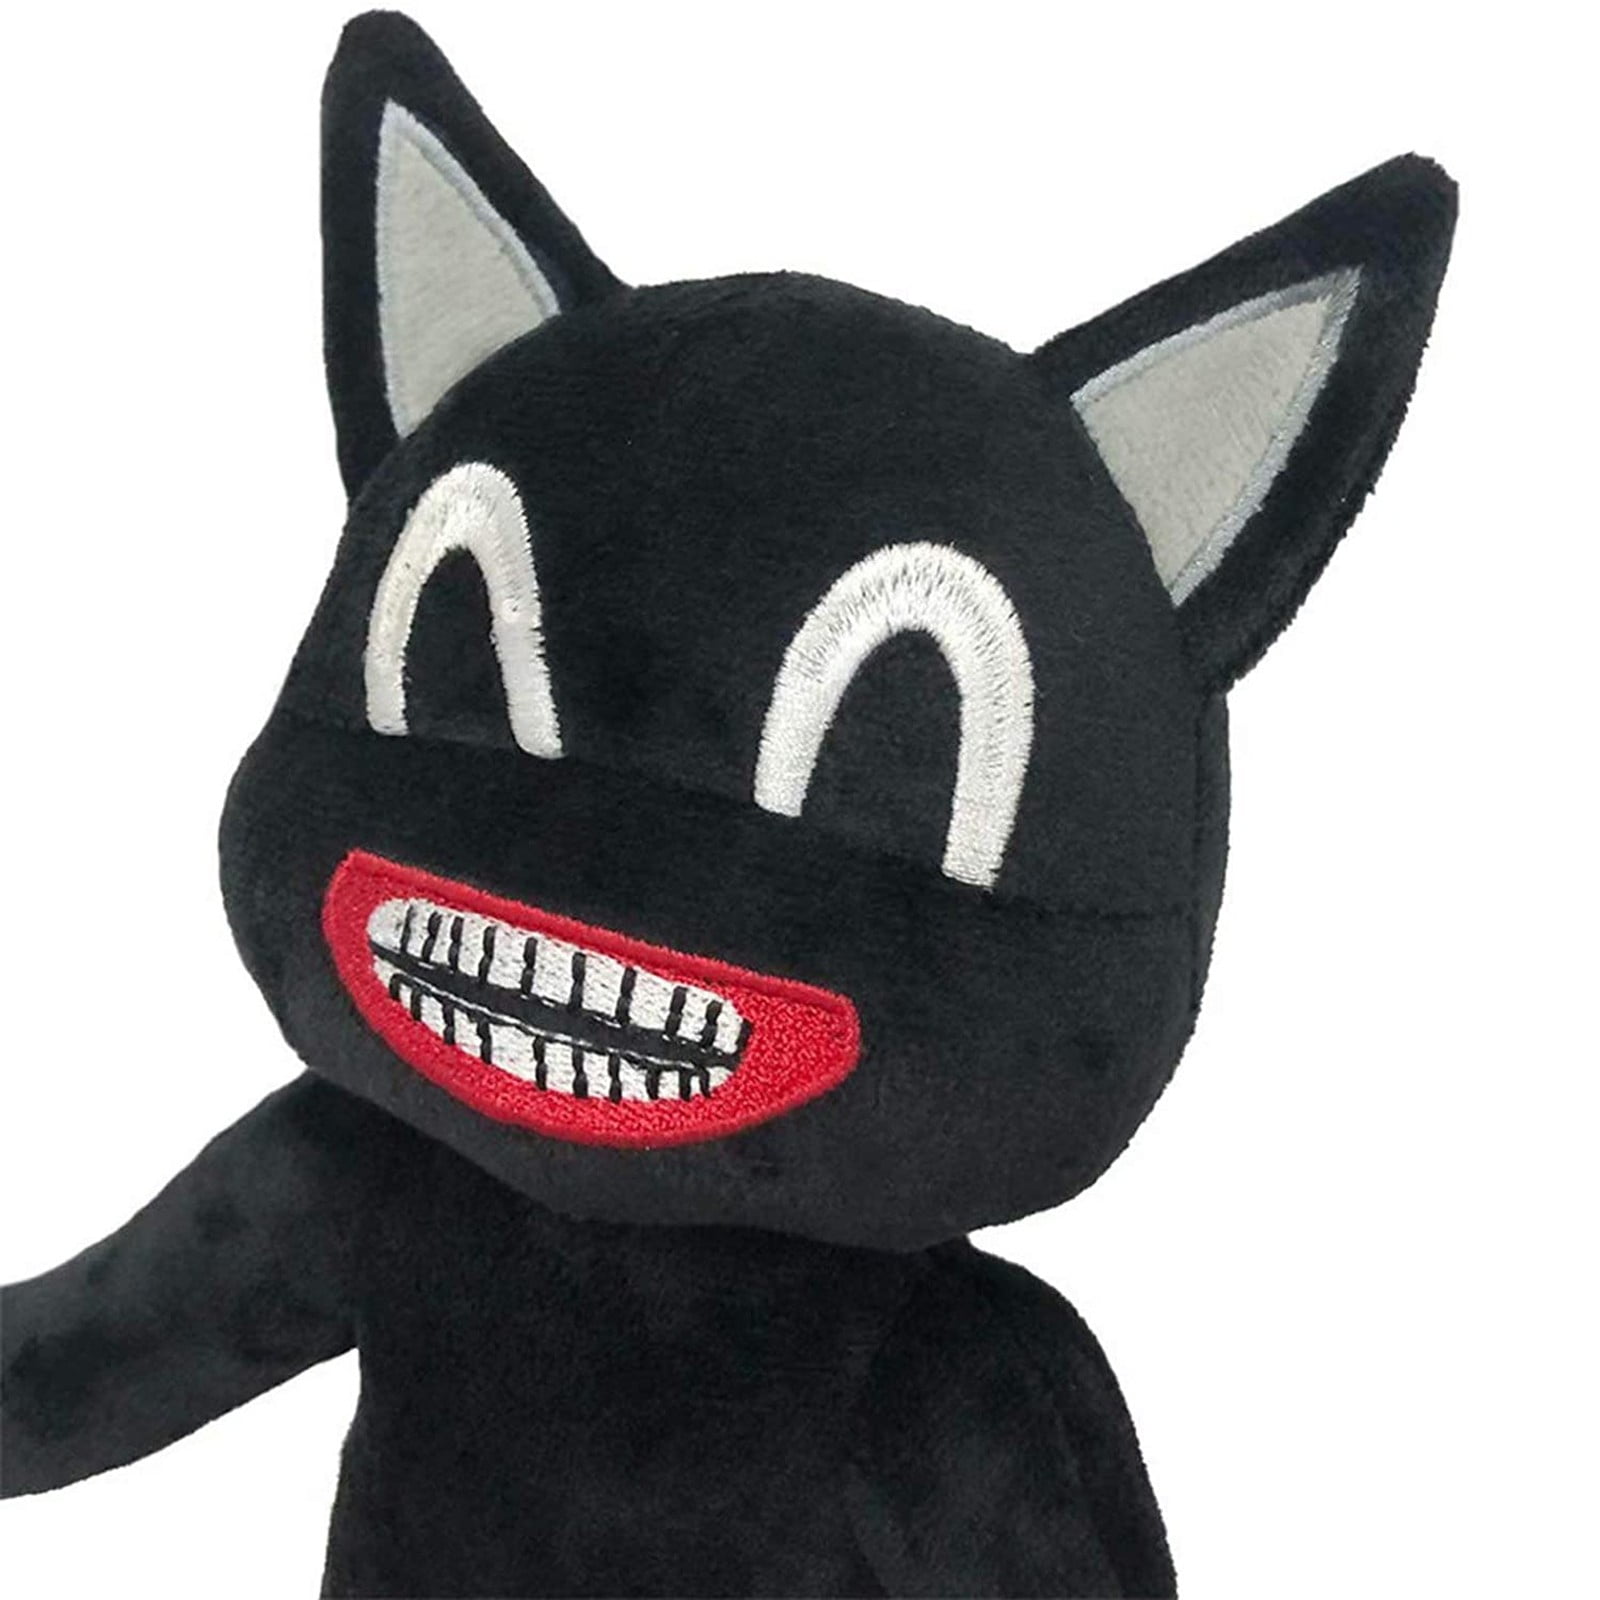 Cartoon Siren Head Black Cat Plush Toy Stuffed Doll Toy 30cm//12in Christmas Gift